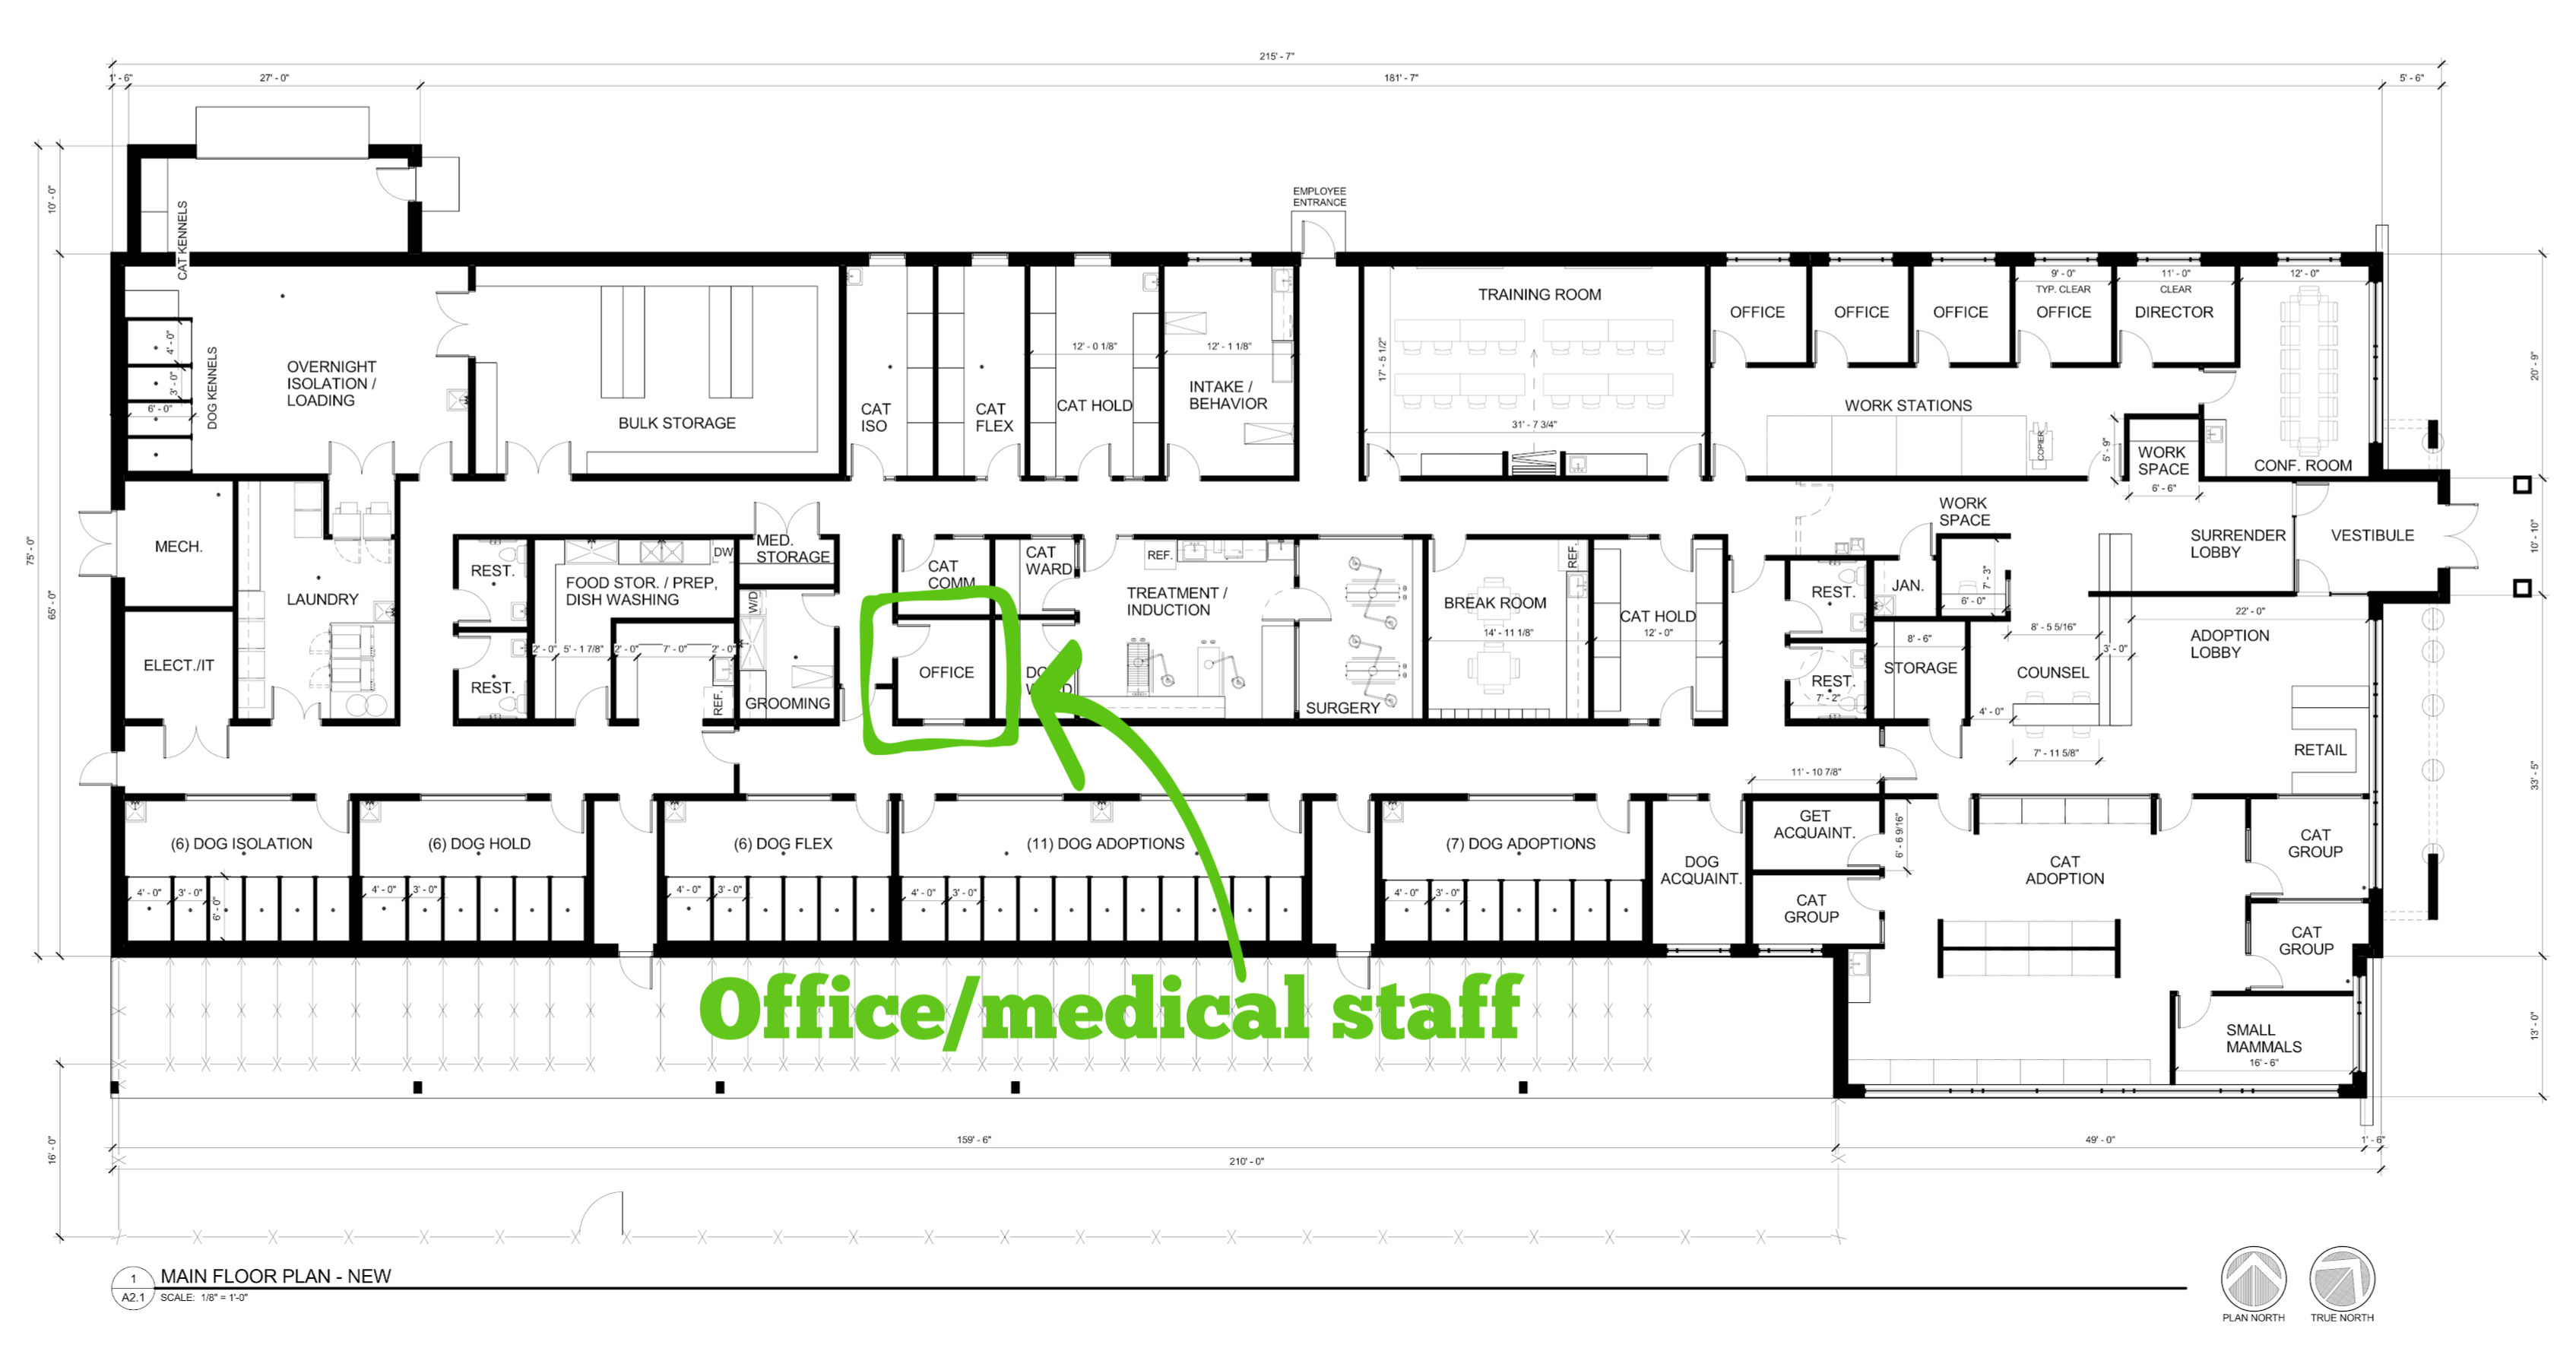 Office/Medical Staff